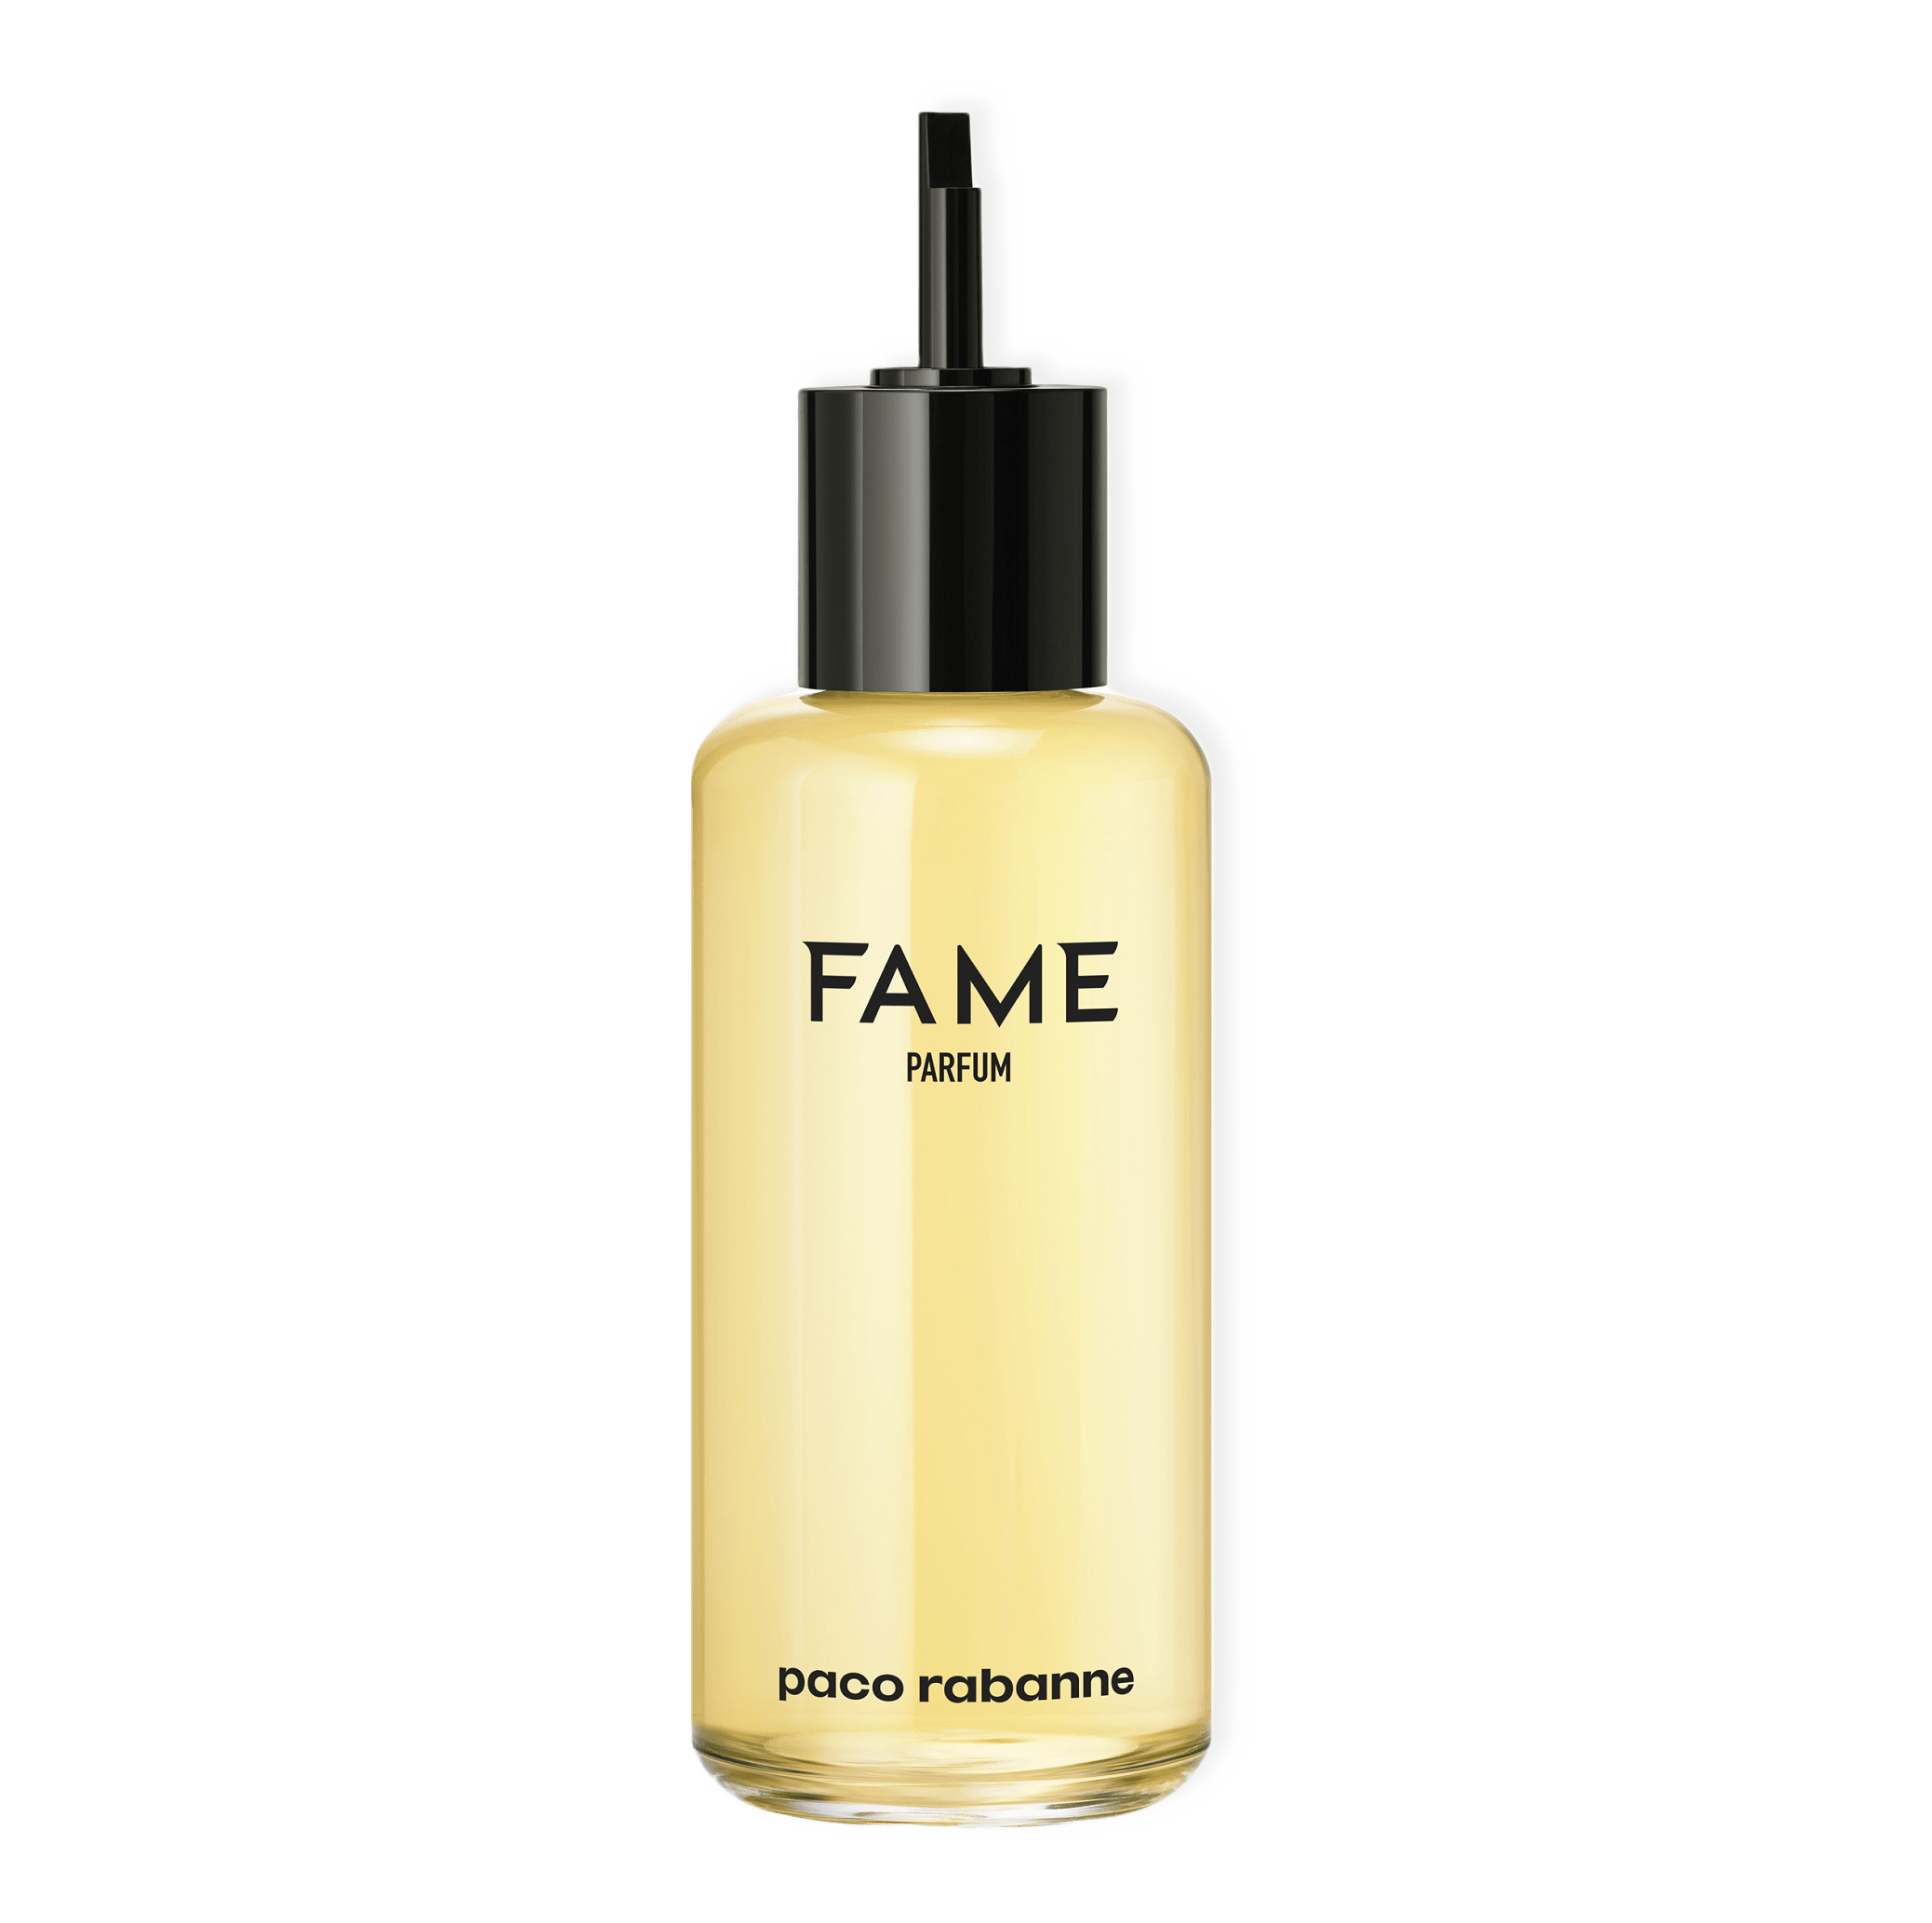 Fame Parfum Refill från Paco Rabanne